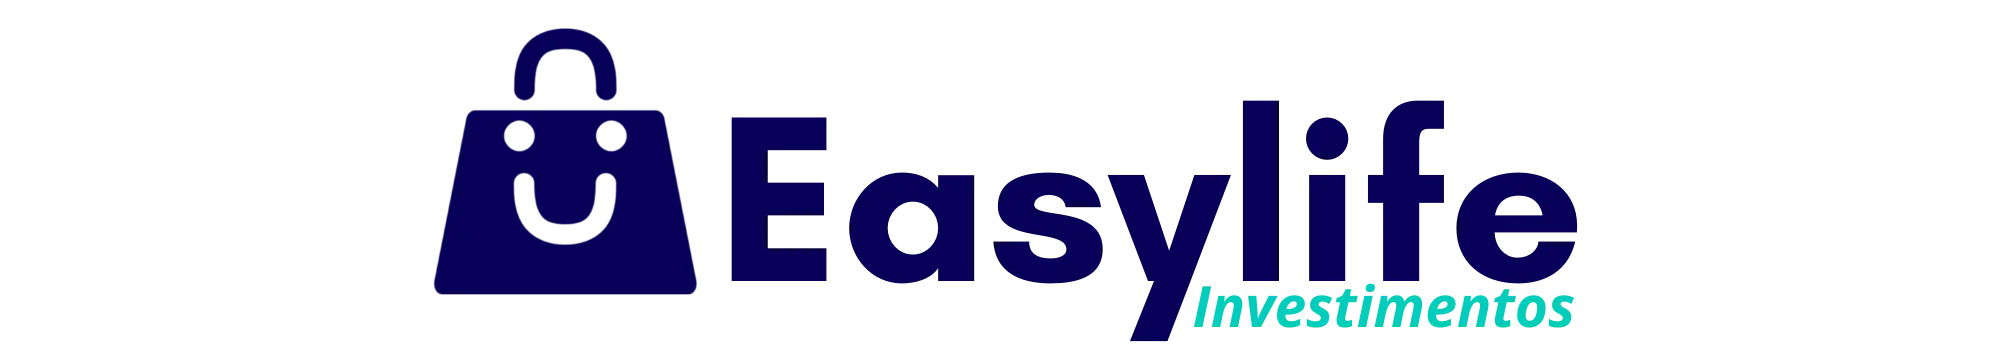 easylife-logo